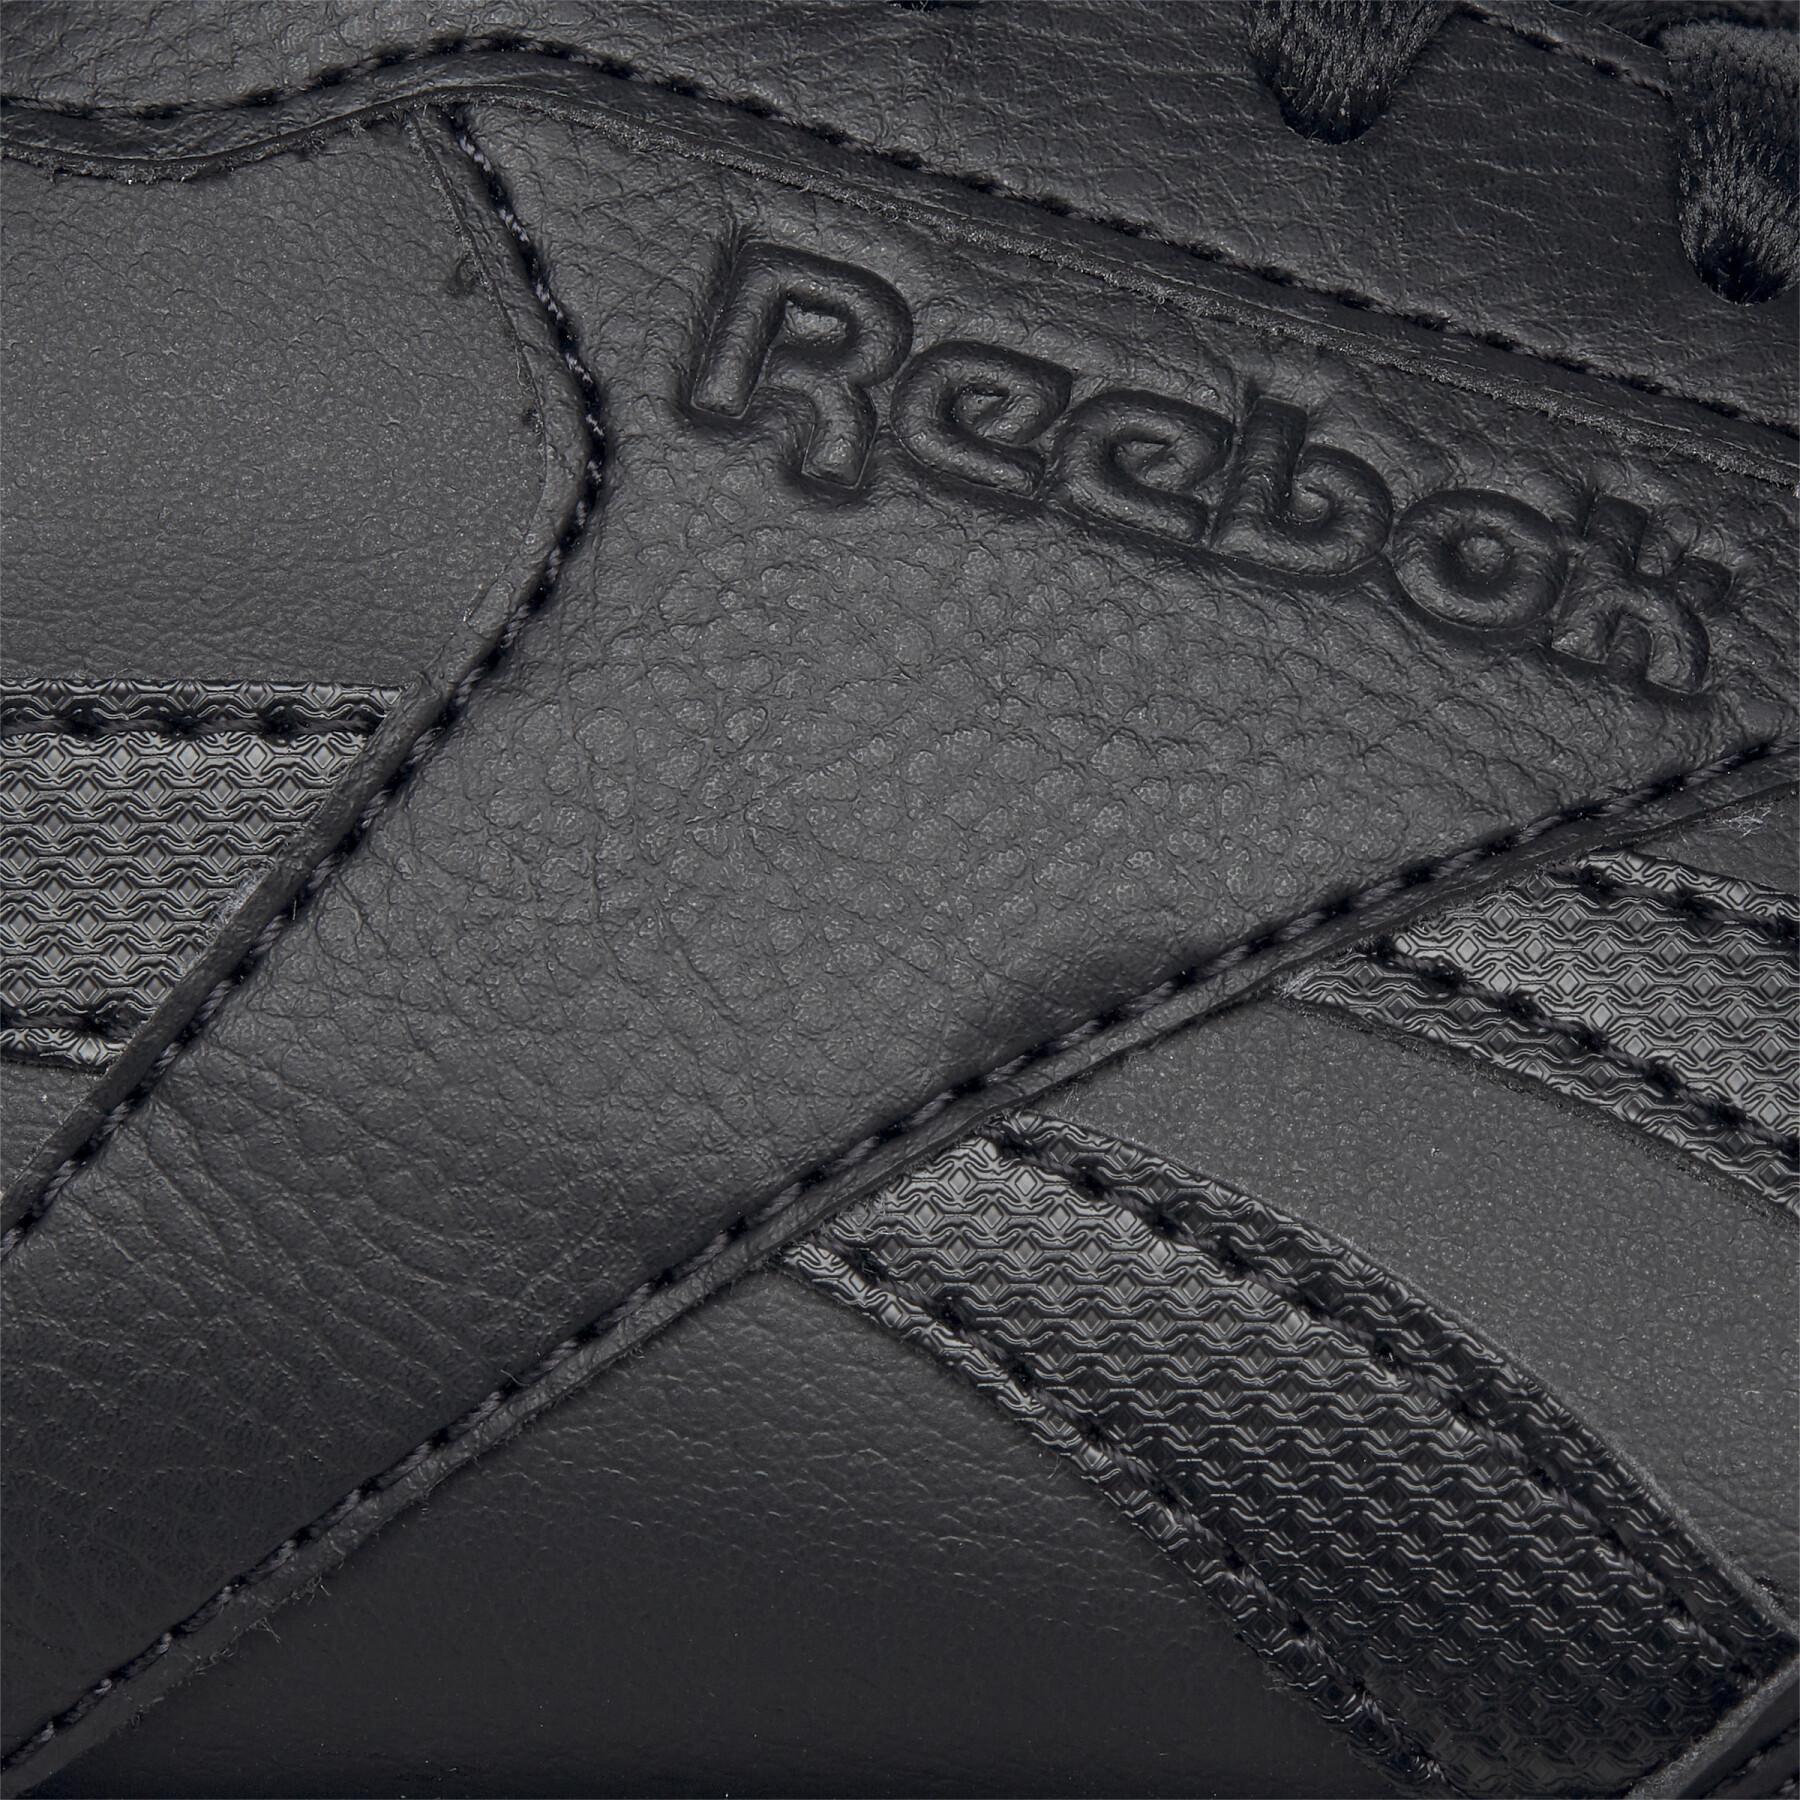 Sneakers Reebok Classics Reebok Royal Glide